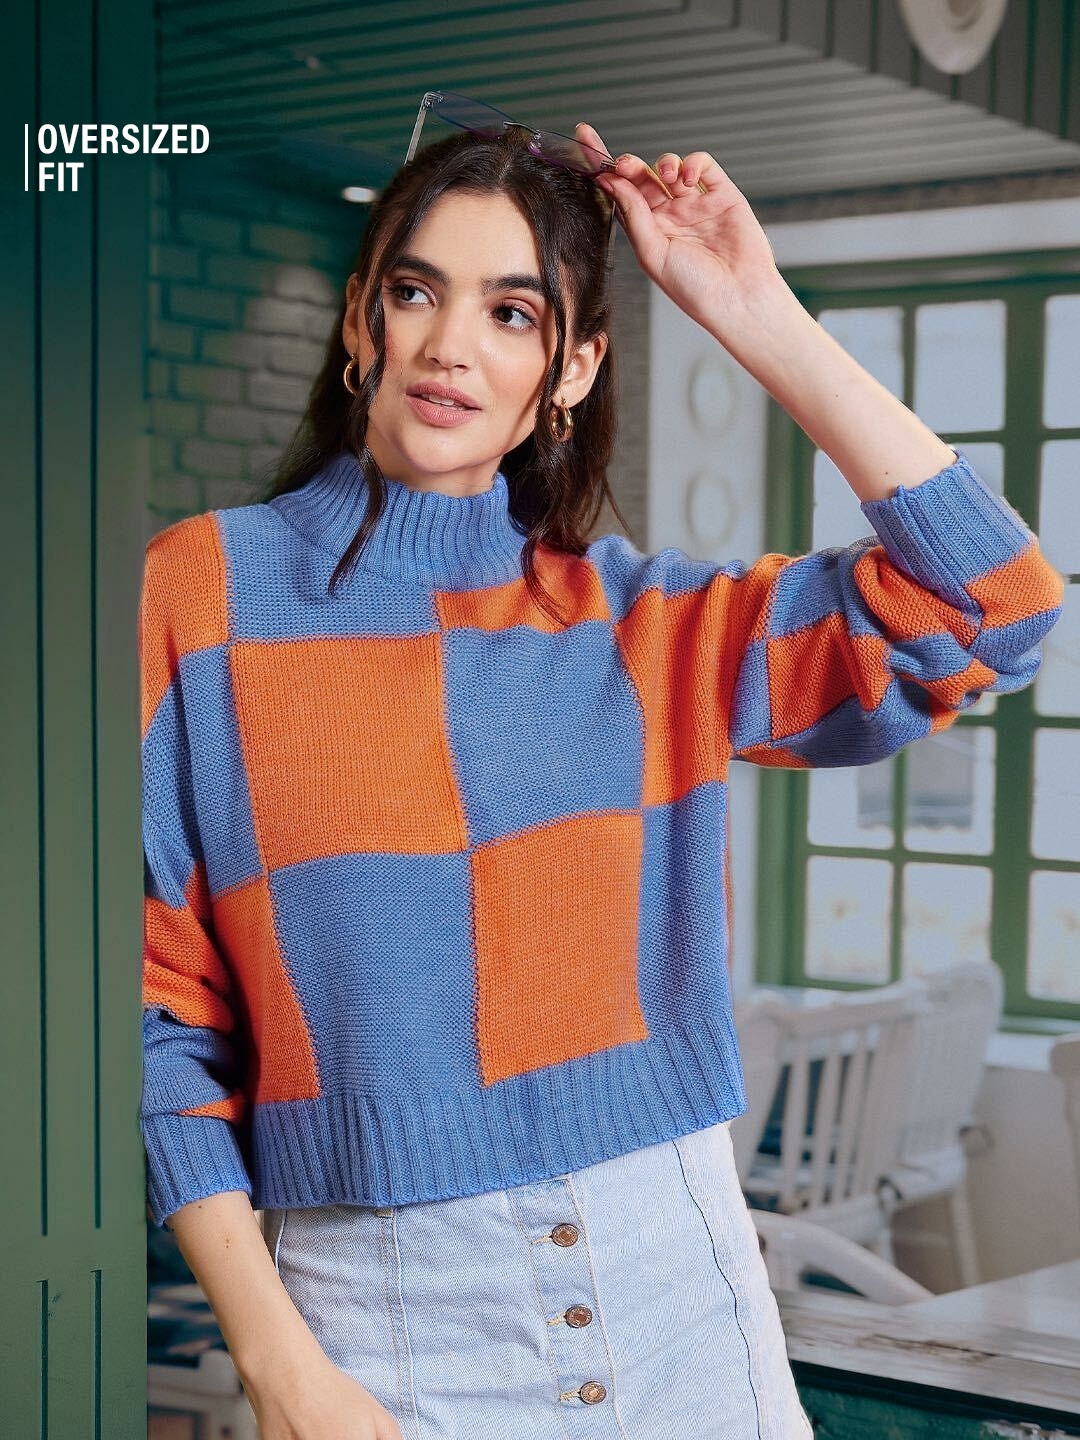 Women's Solids: Blue, Orange (Colourblock) Women's Turtle Neck Sweaters